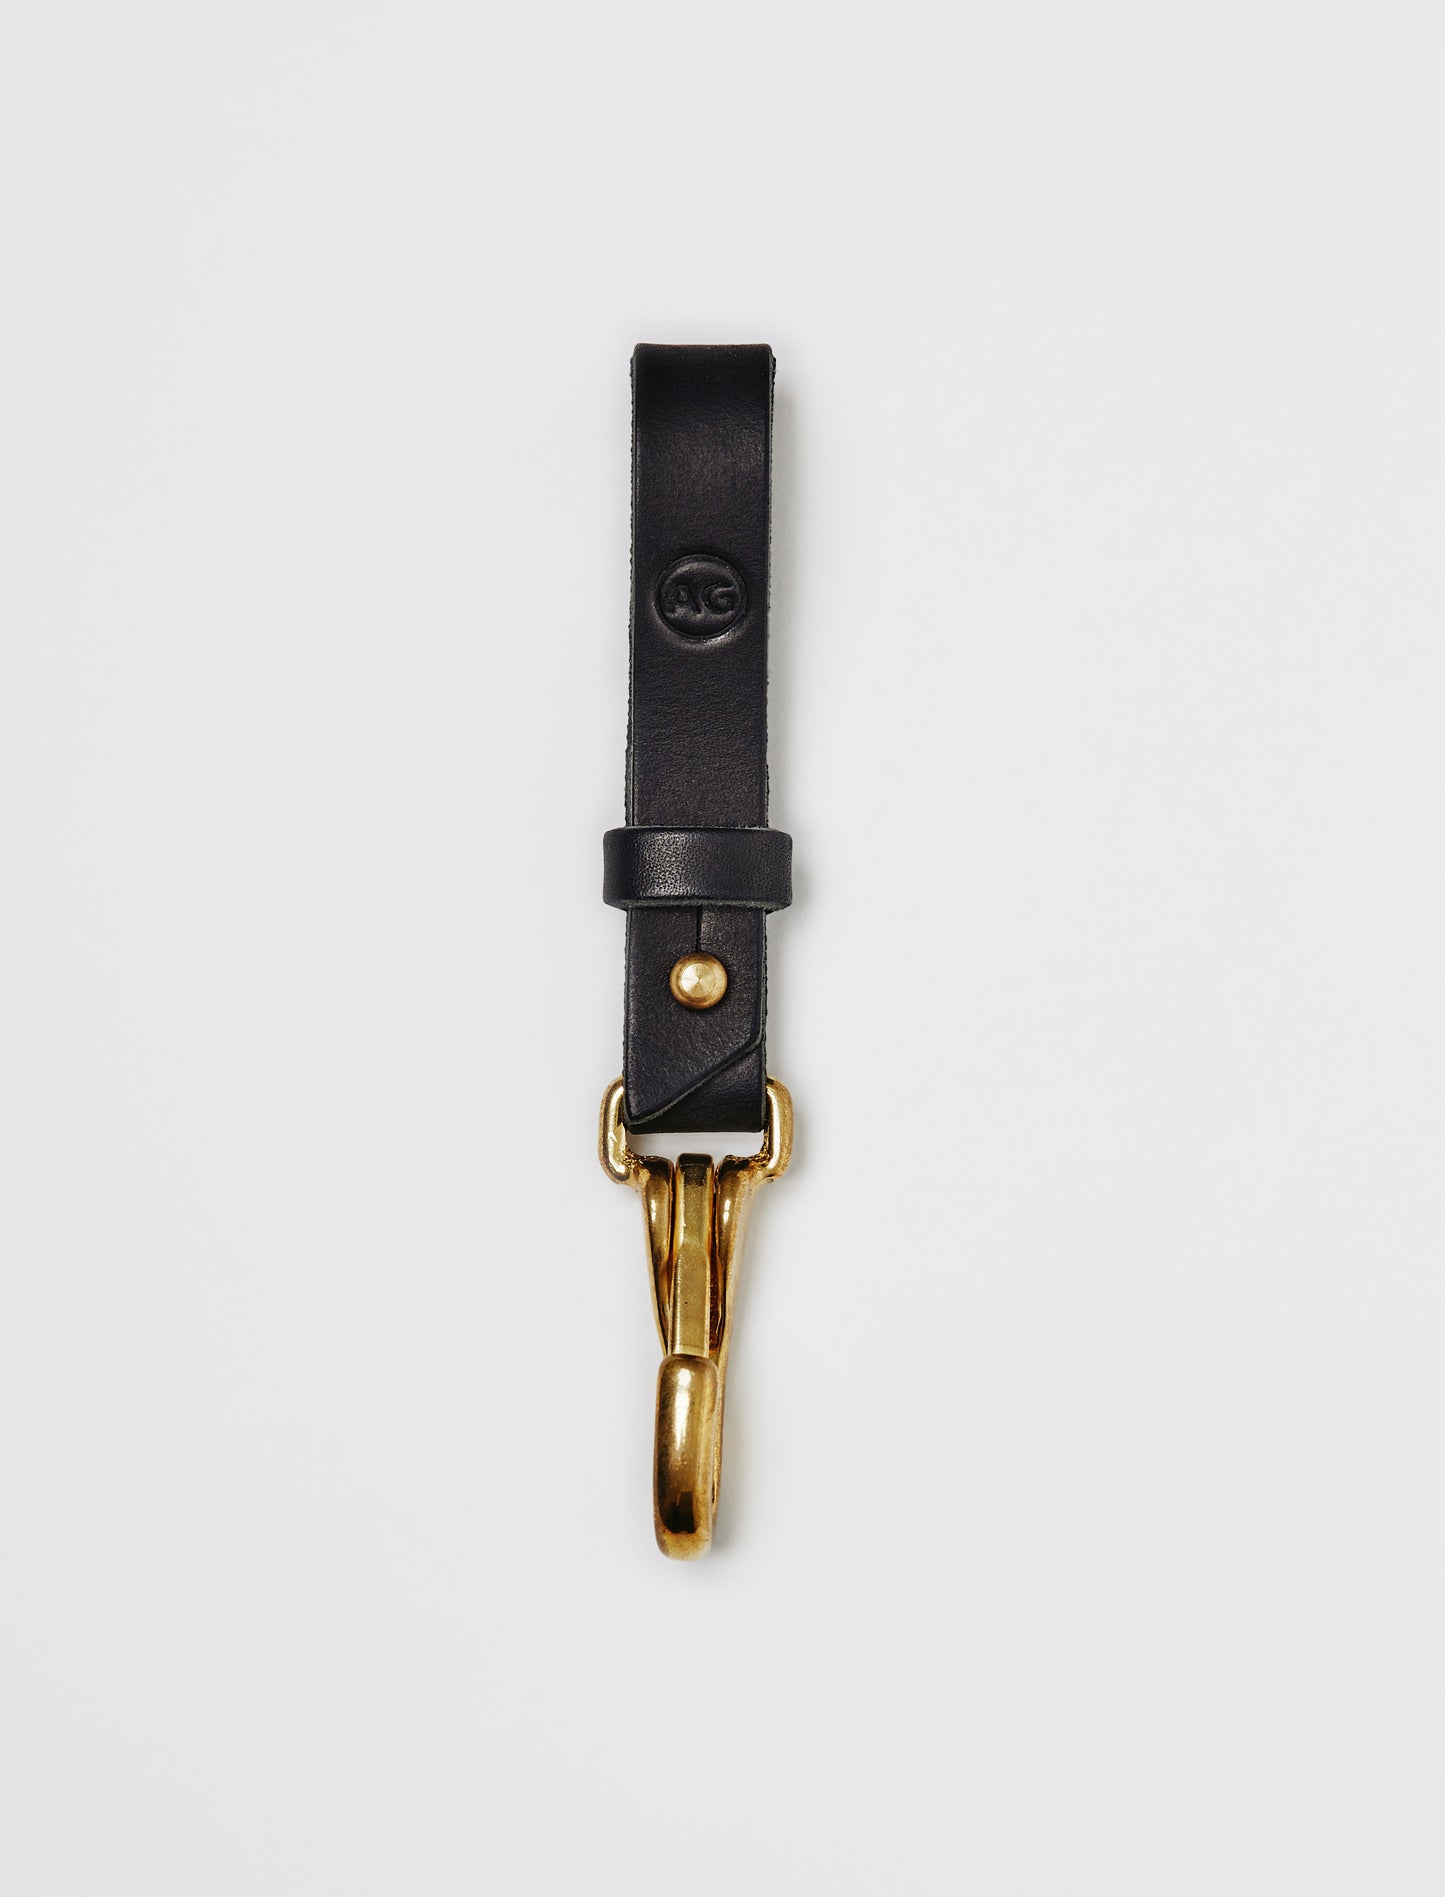 Ag Keychain Black/Brass Keychain Unisex Accessory Photo 1